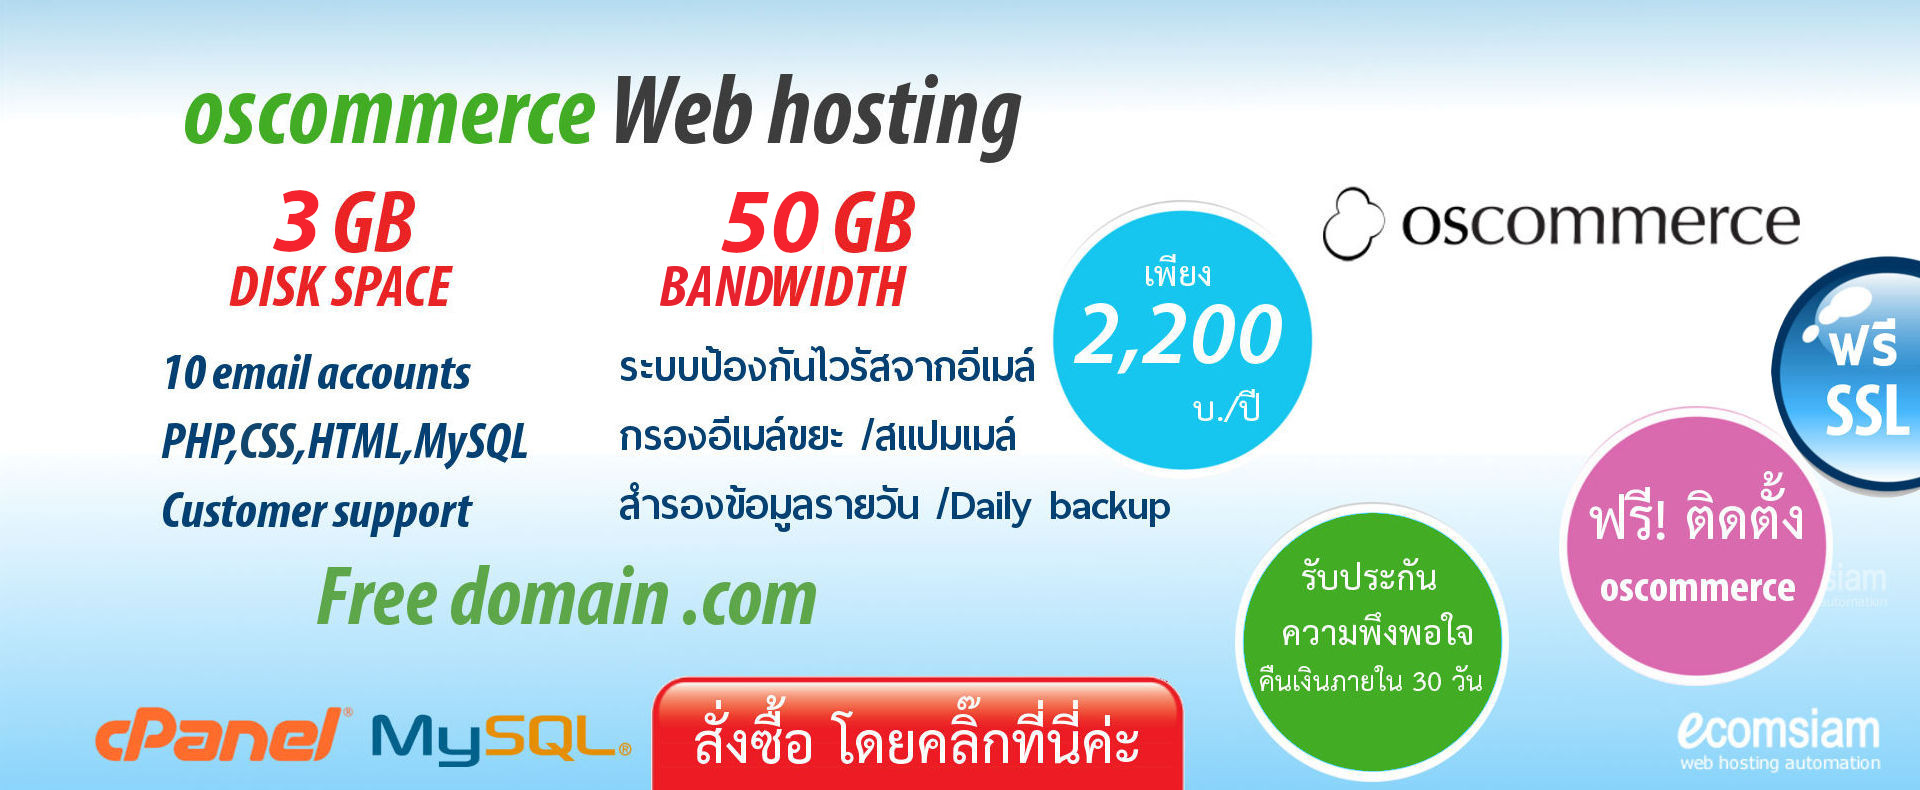 web hosting thai แนะนำ Oscommerce web hosting thailand เพียง 2,200 บ./ปี เว็บโฮสติ้งไทย ฟรี โดเมน ฟรี SSL ฟรีติดตั้ง แนะนำเว็บโฮสติ้ง บริการลูกค้า  Support ดูแลดี โดย thailandwebhost.com - oscommerce web hosting thailand free domain